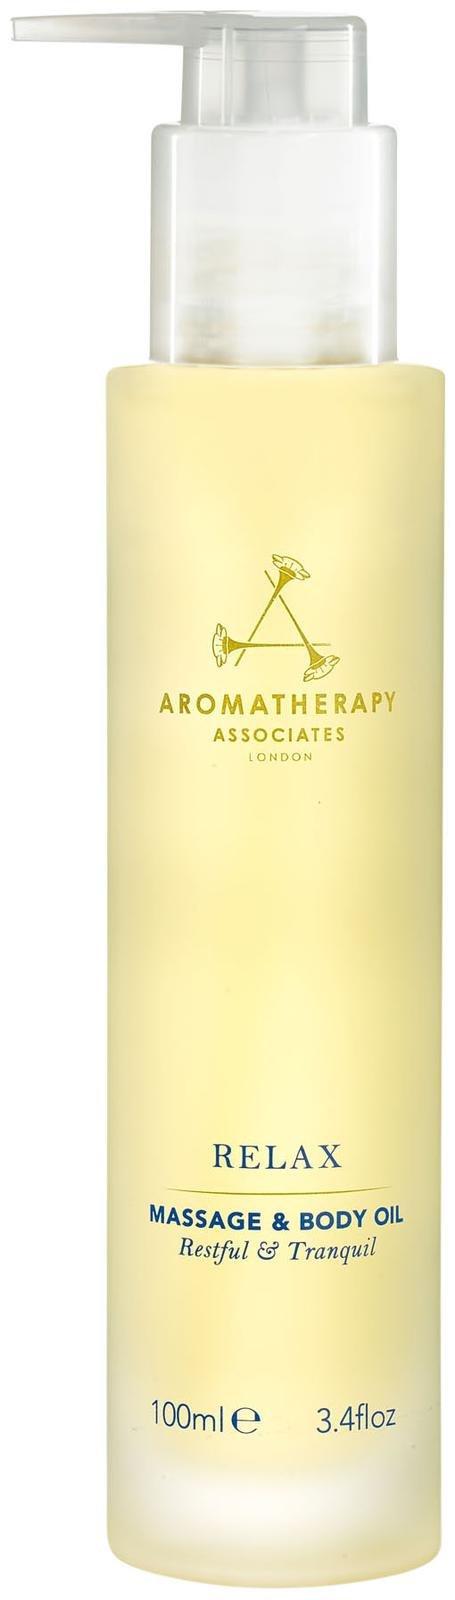 Aromatherapy Associates Relax Massage & Body Oil